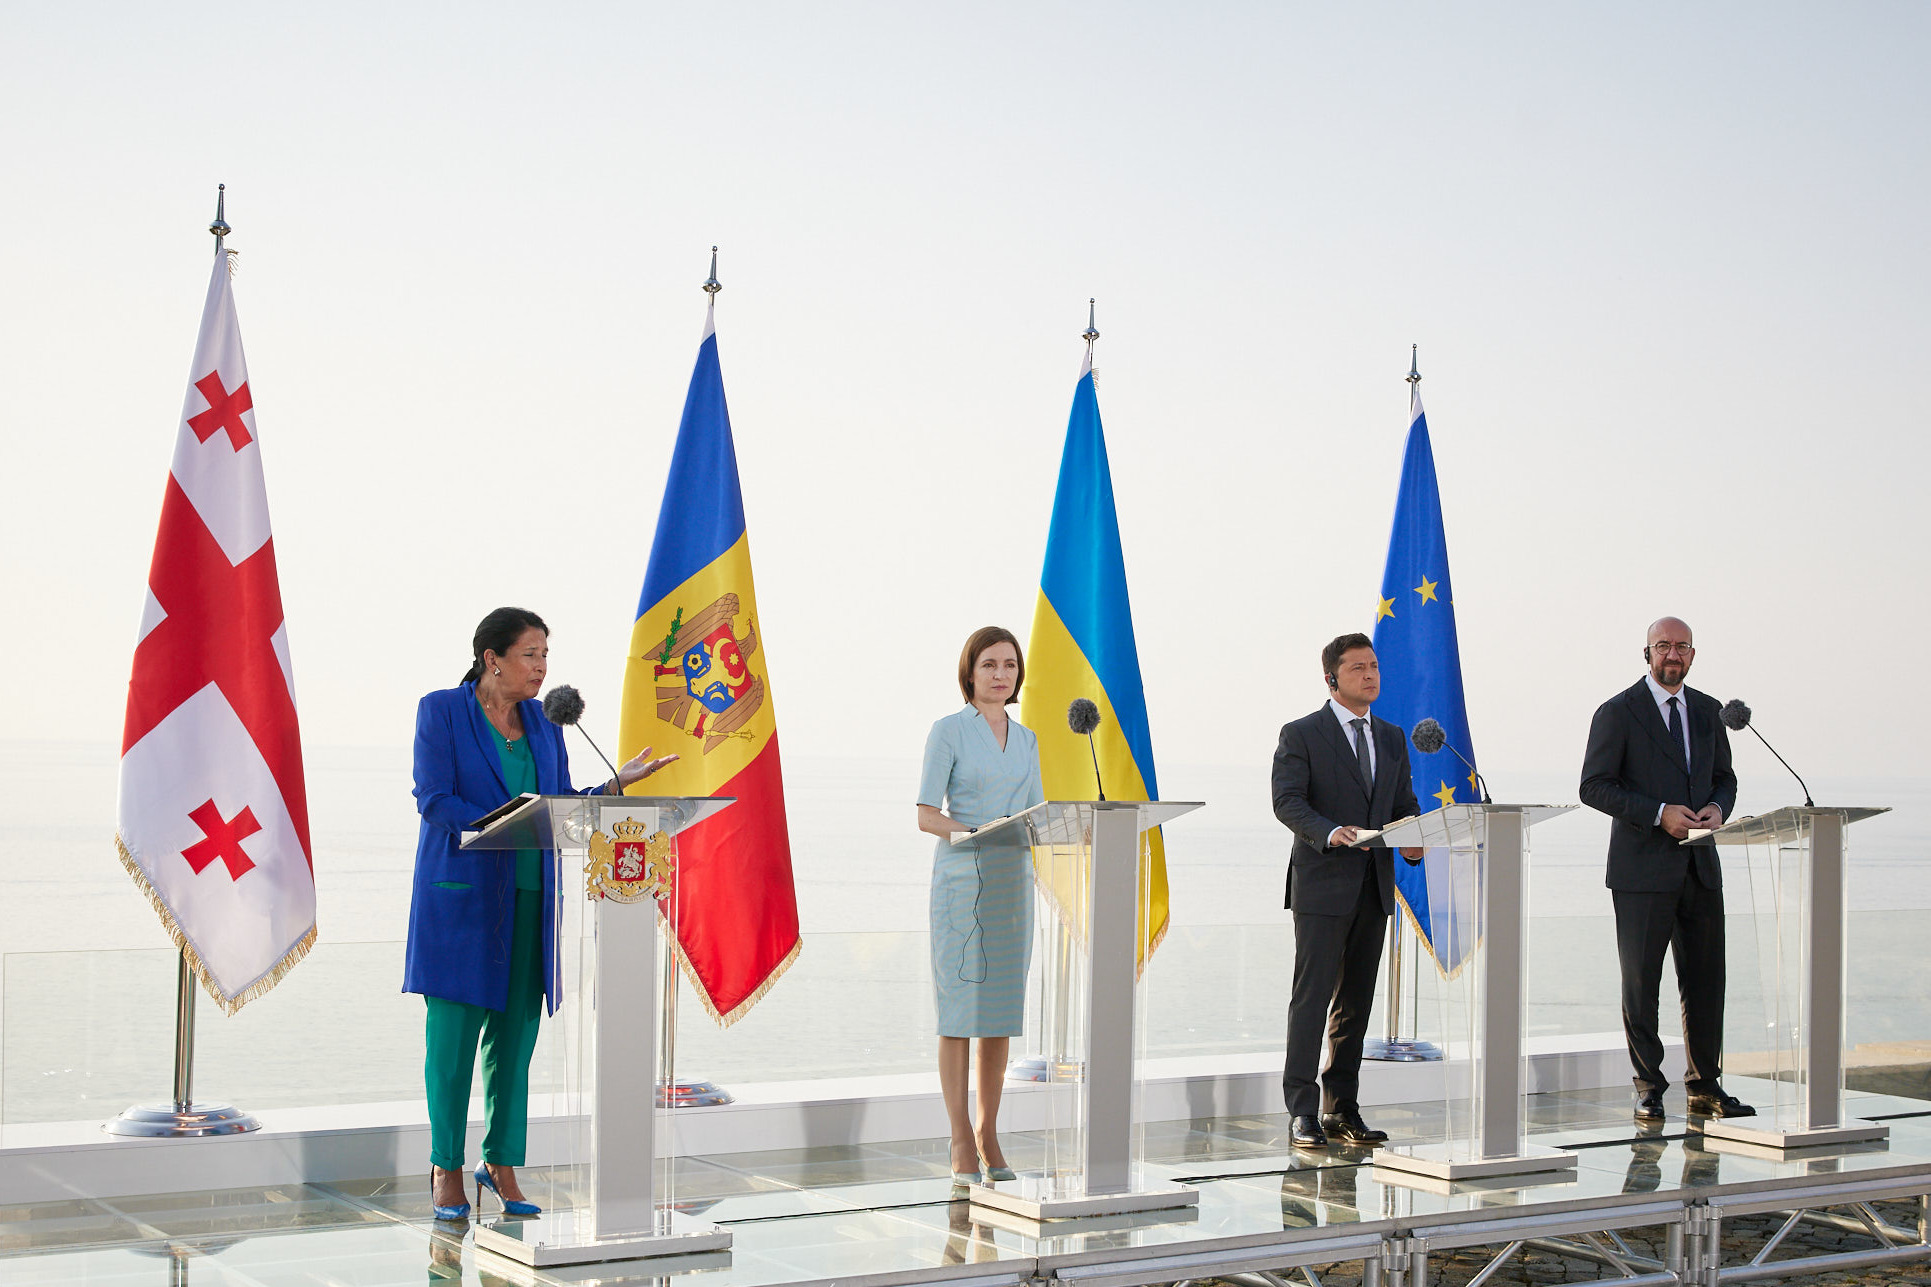 From left to right: President of Georgia Salome Zourabichvili, President of Moldova Maia Sandu, President of Ukraine Volodymyr Zelenskyy and President of the European Council Charles Michel during the 2021 Batumi International Conference.